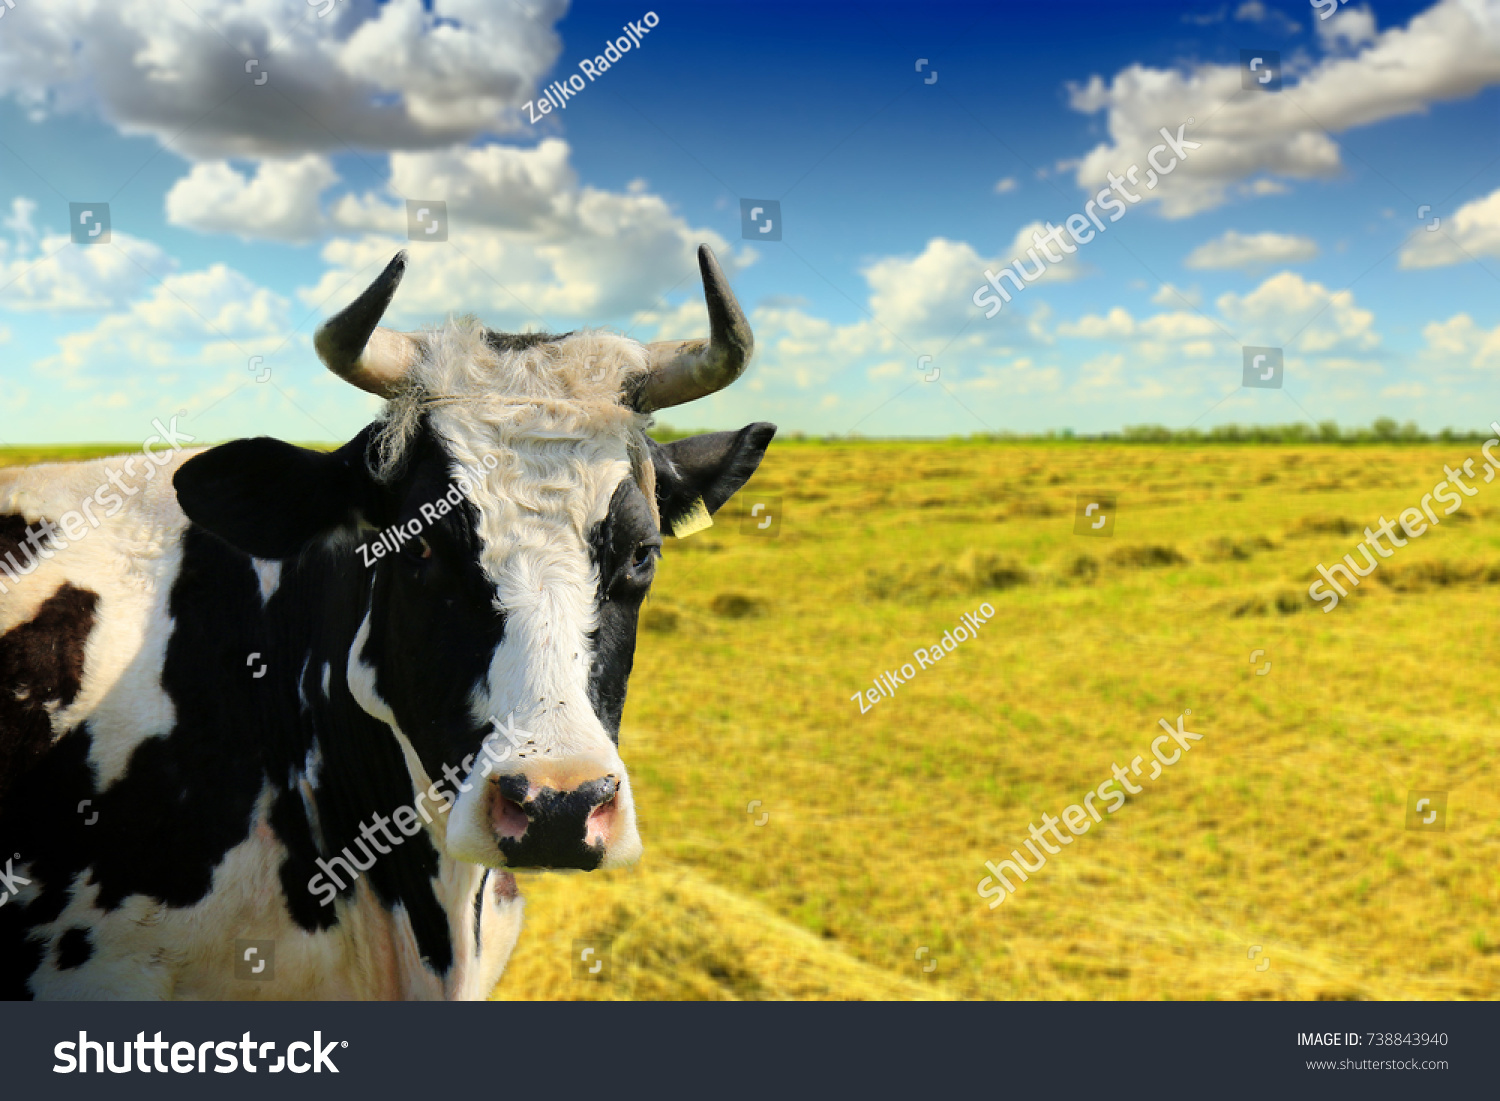 powerpoint-template-cartoon-cows-cow-okpplkulh